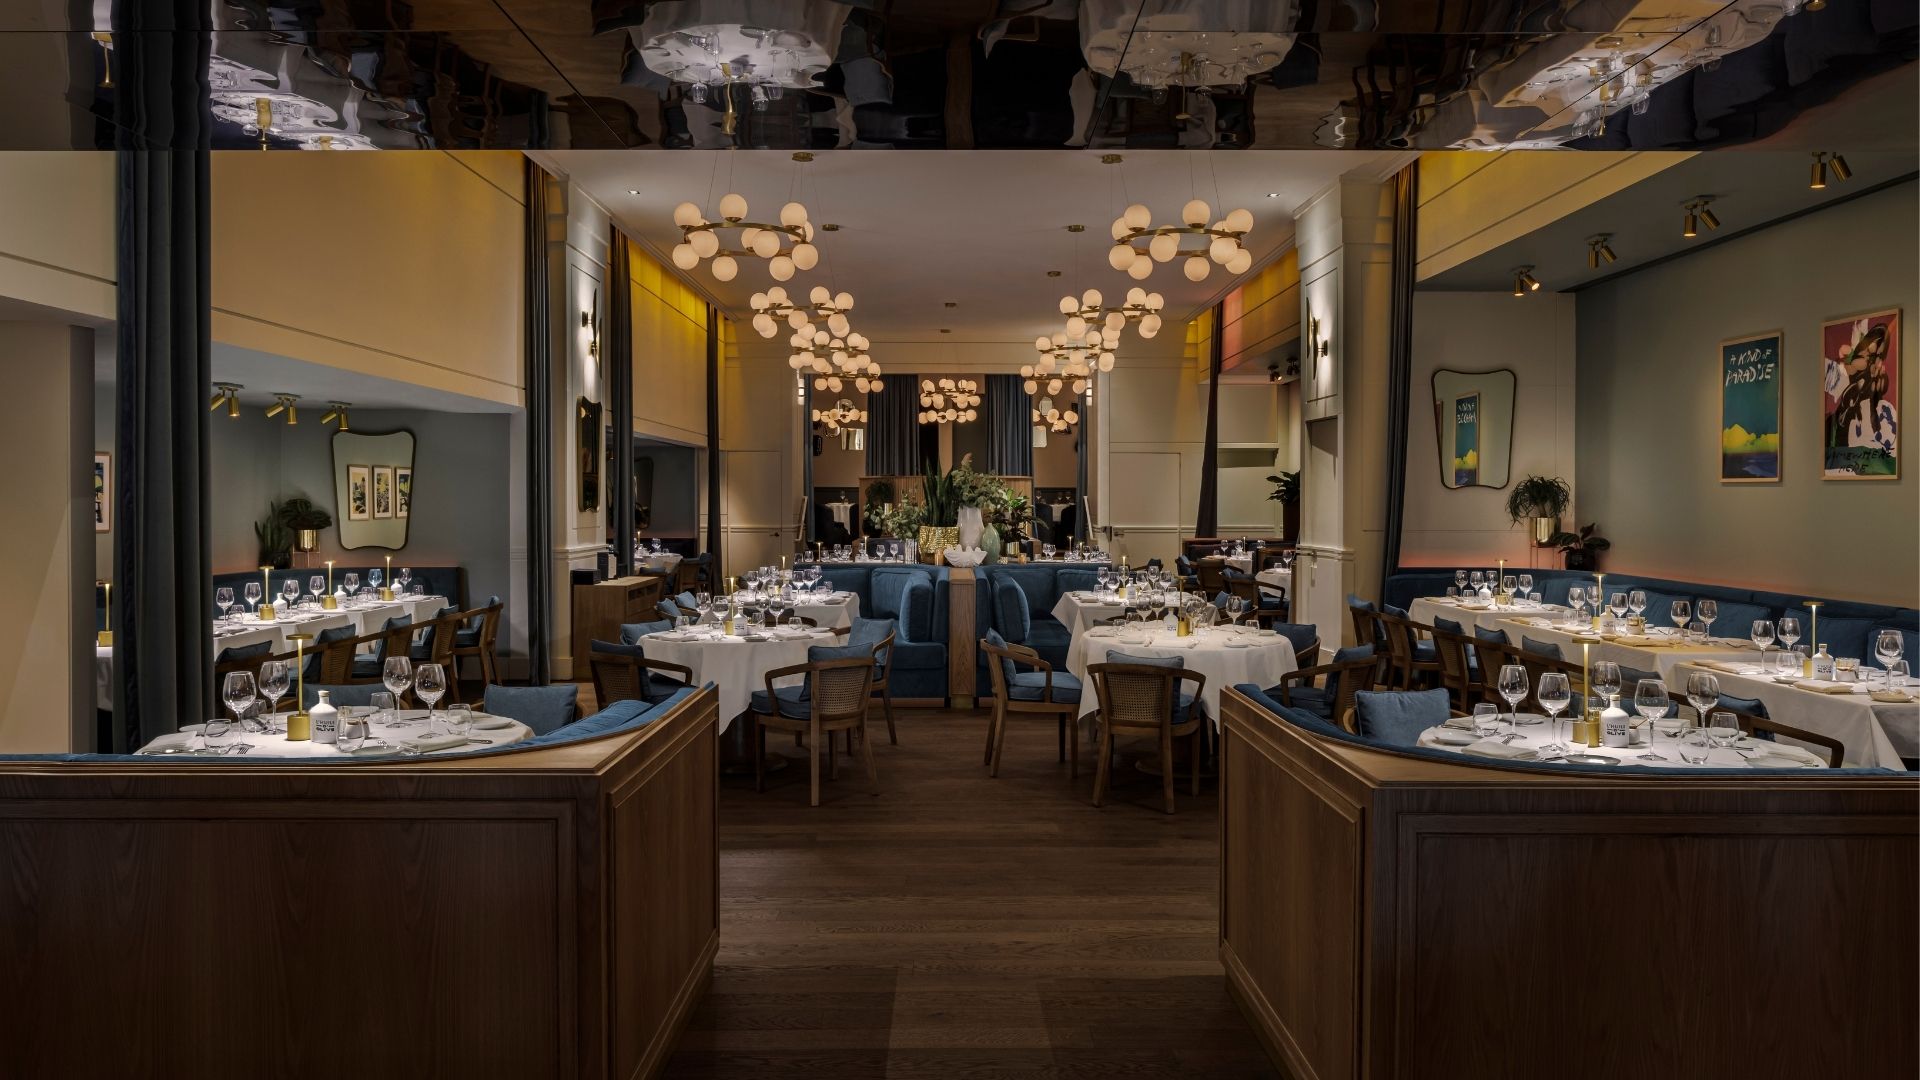 Luxury Yourself our Restaurant Treat Miami Cuisine to in Mediterranean